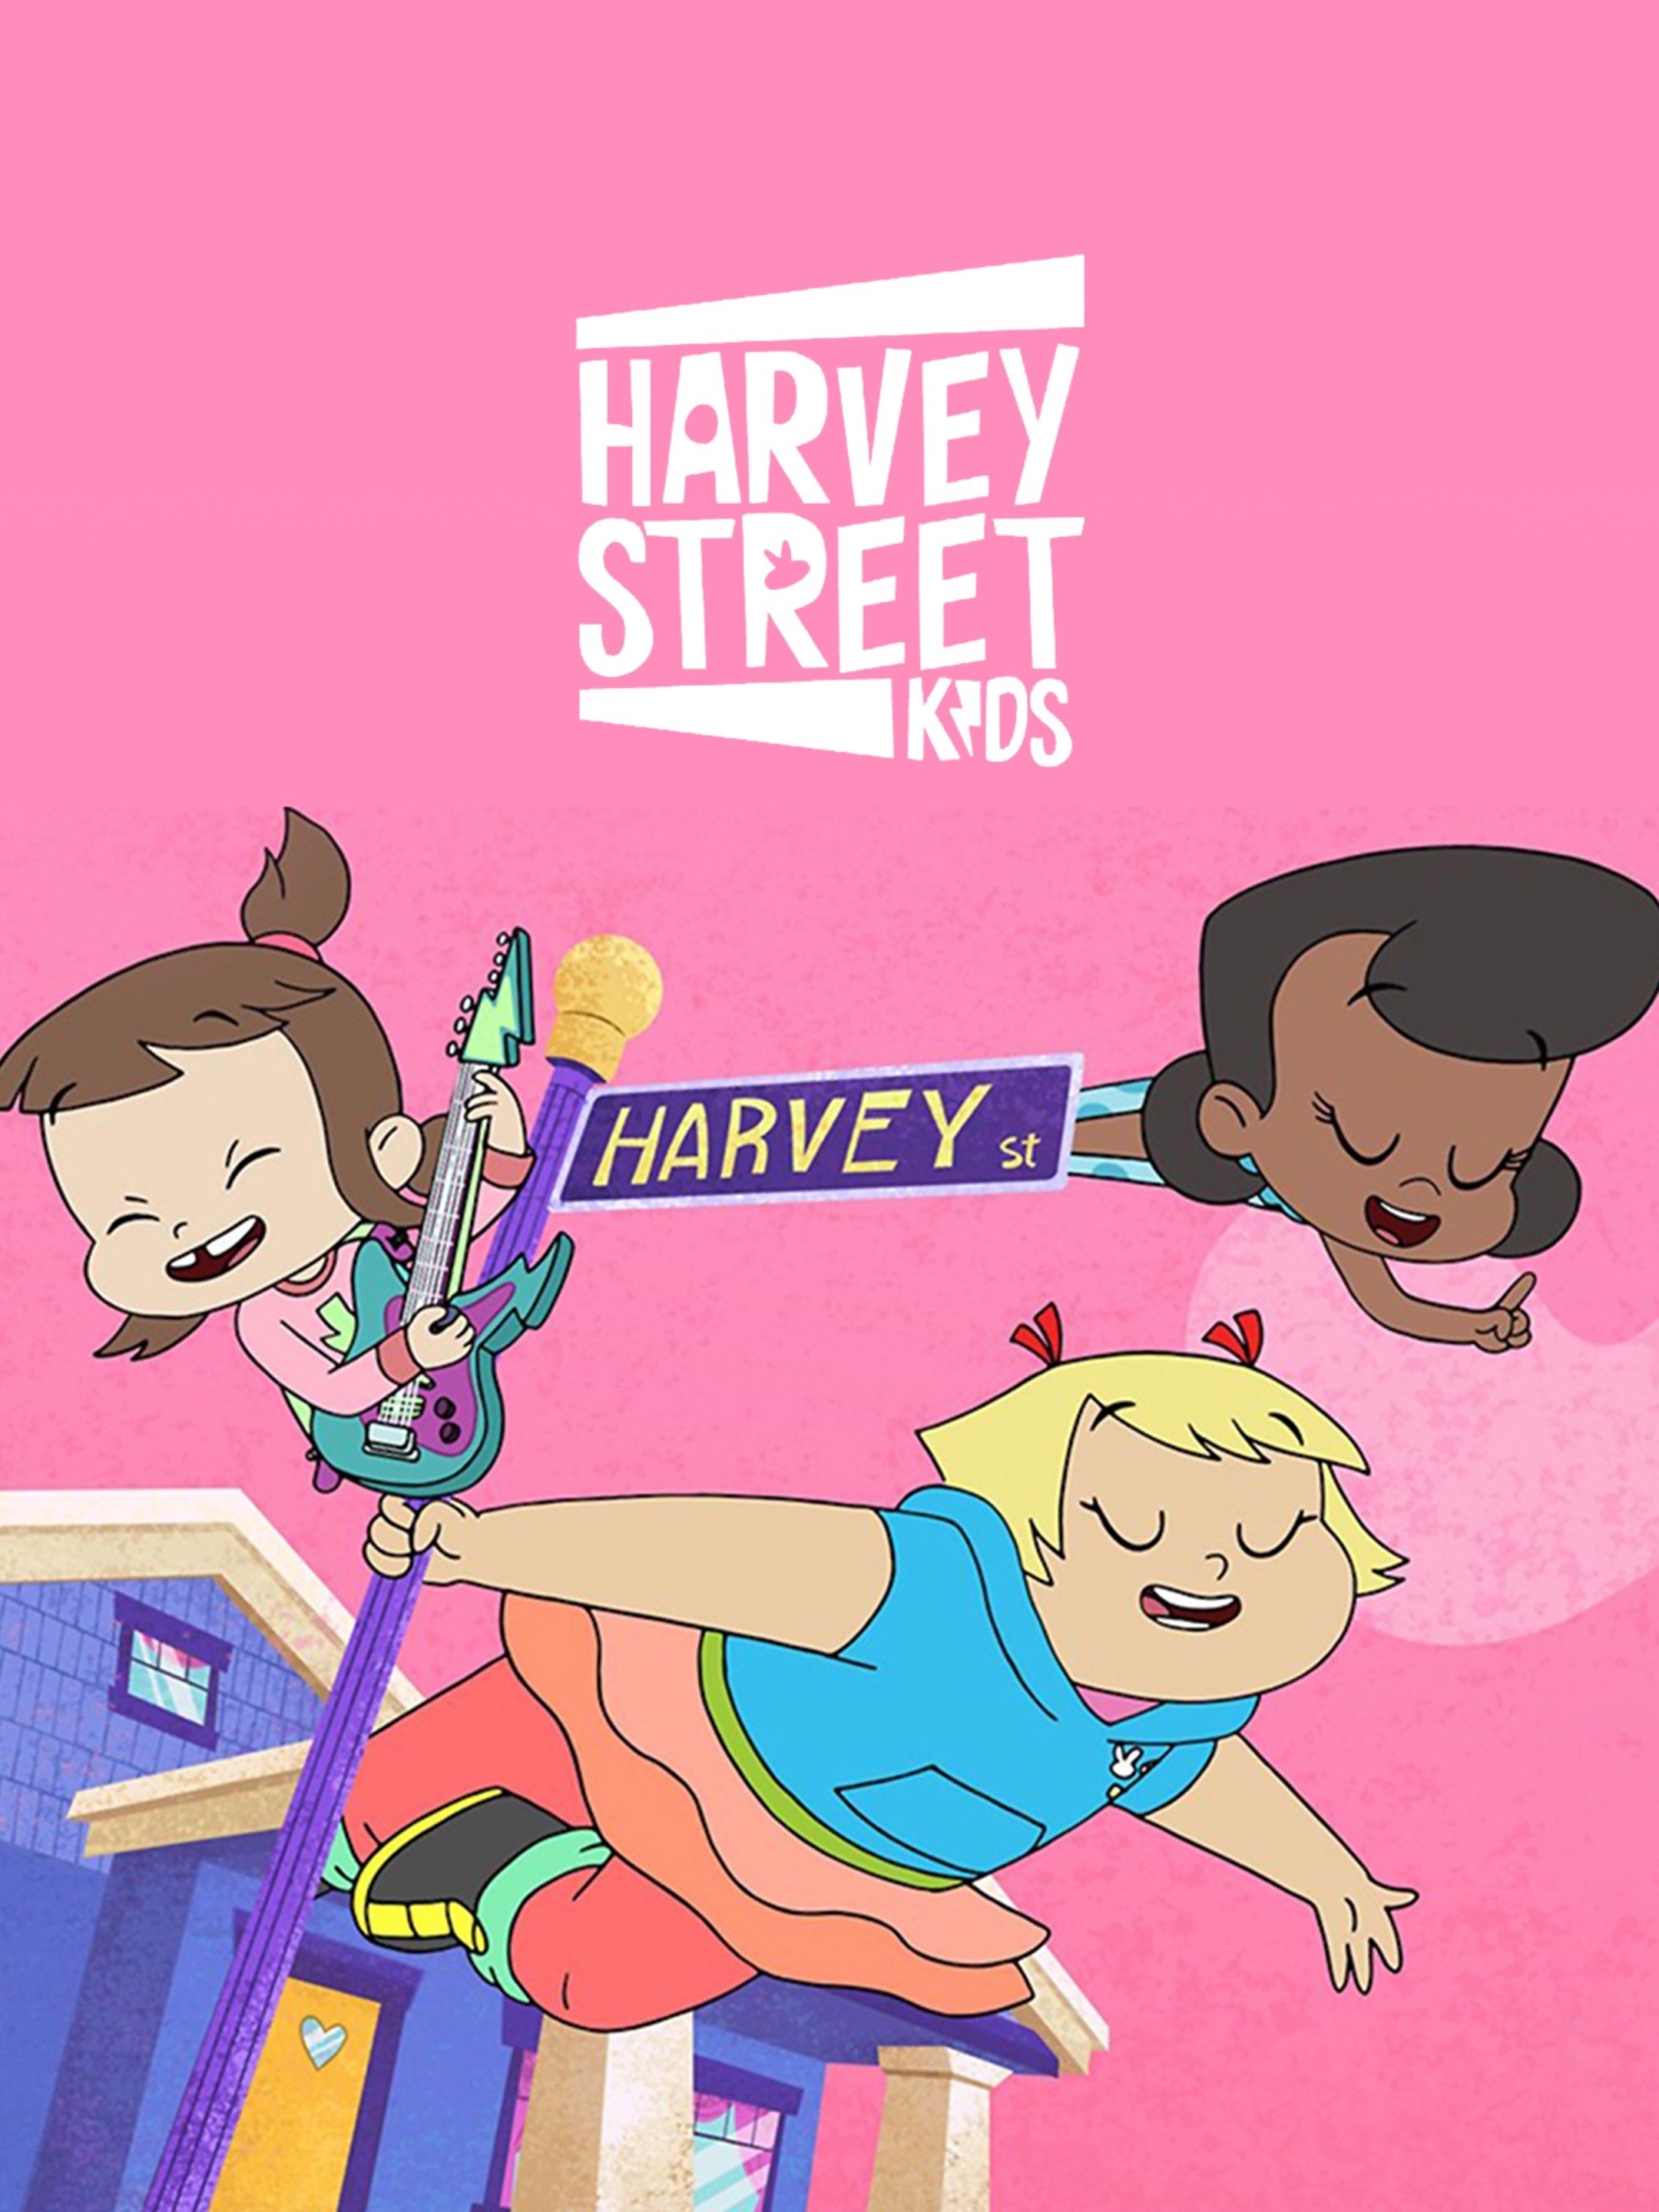 Harvey Street Kids